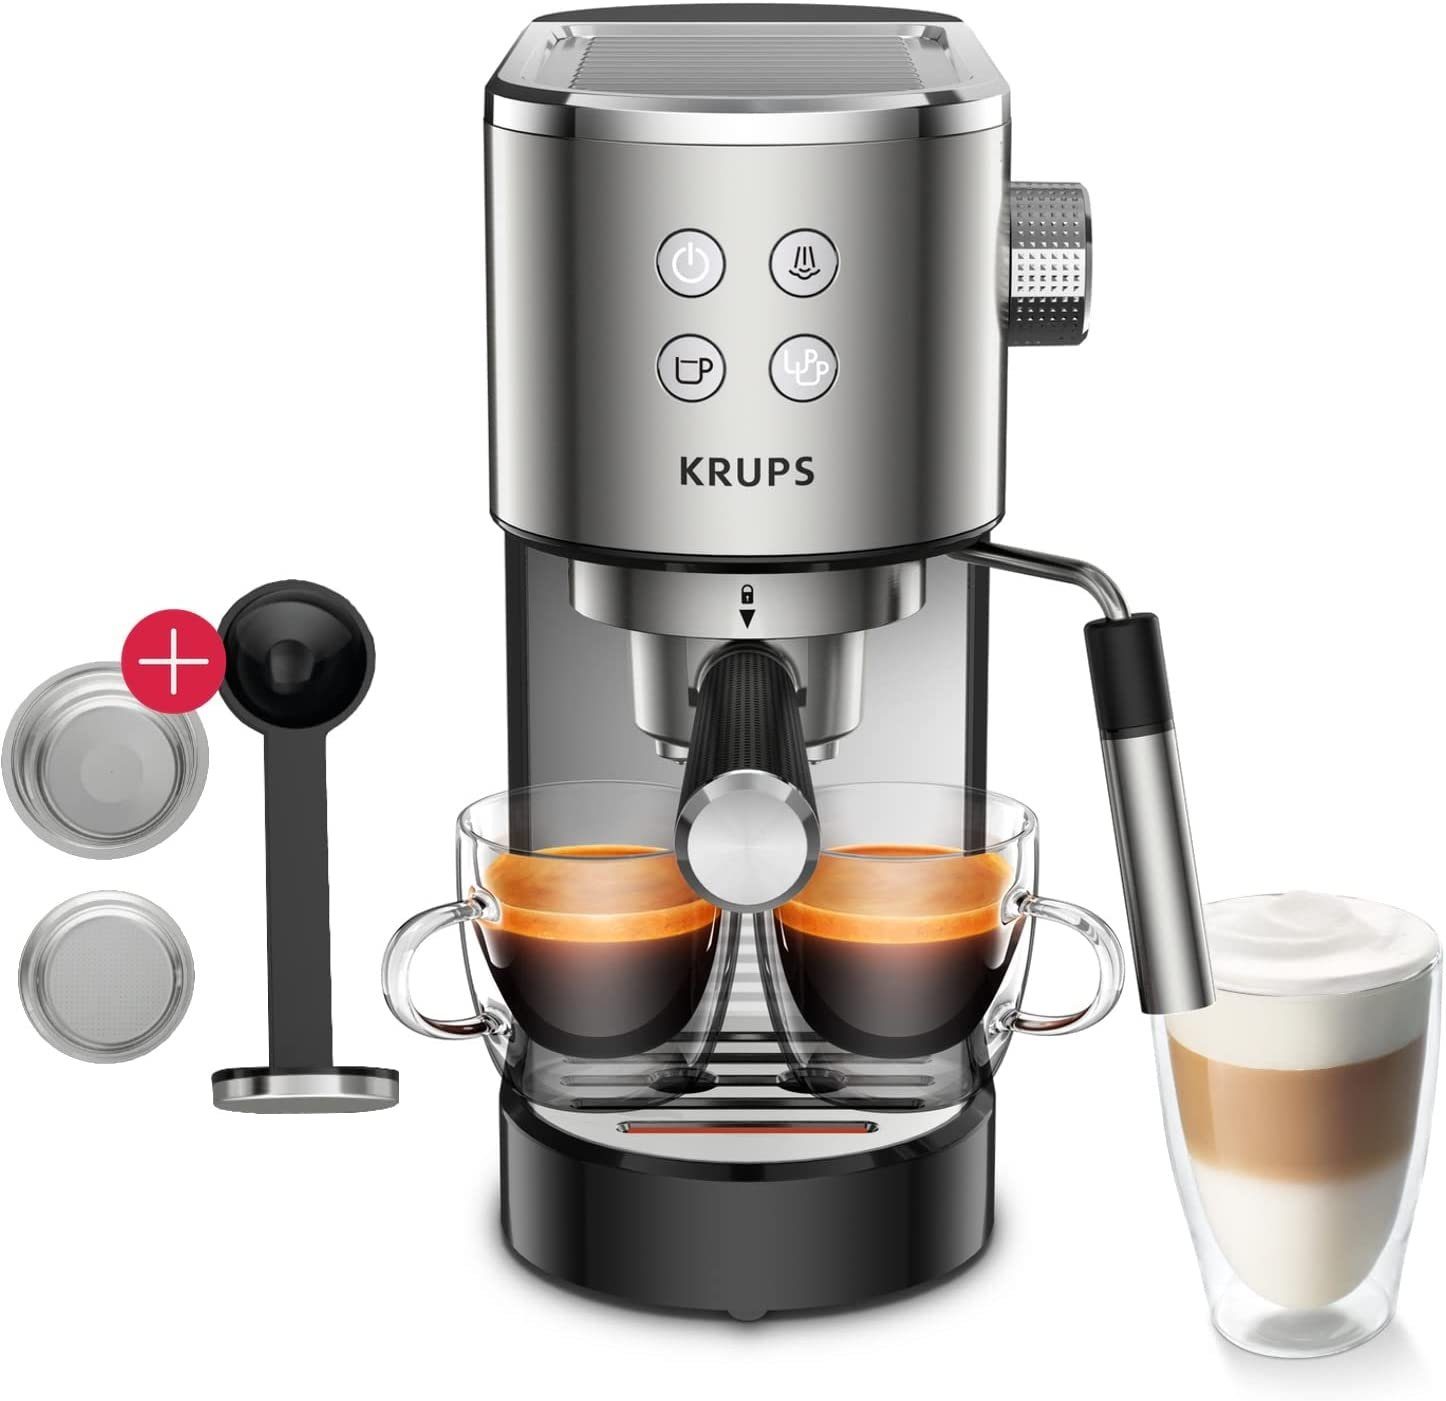 Krups Espressomaschine 1l Filtereinsatz Abschaltung, ESE 15 XP442C, automatischer Tamper, Milchschaumdüse + geeignet Kaffeepads Bar Kaffeekanne, Edelstahl